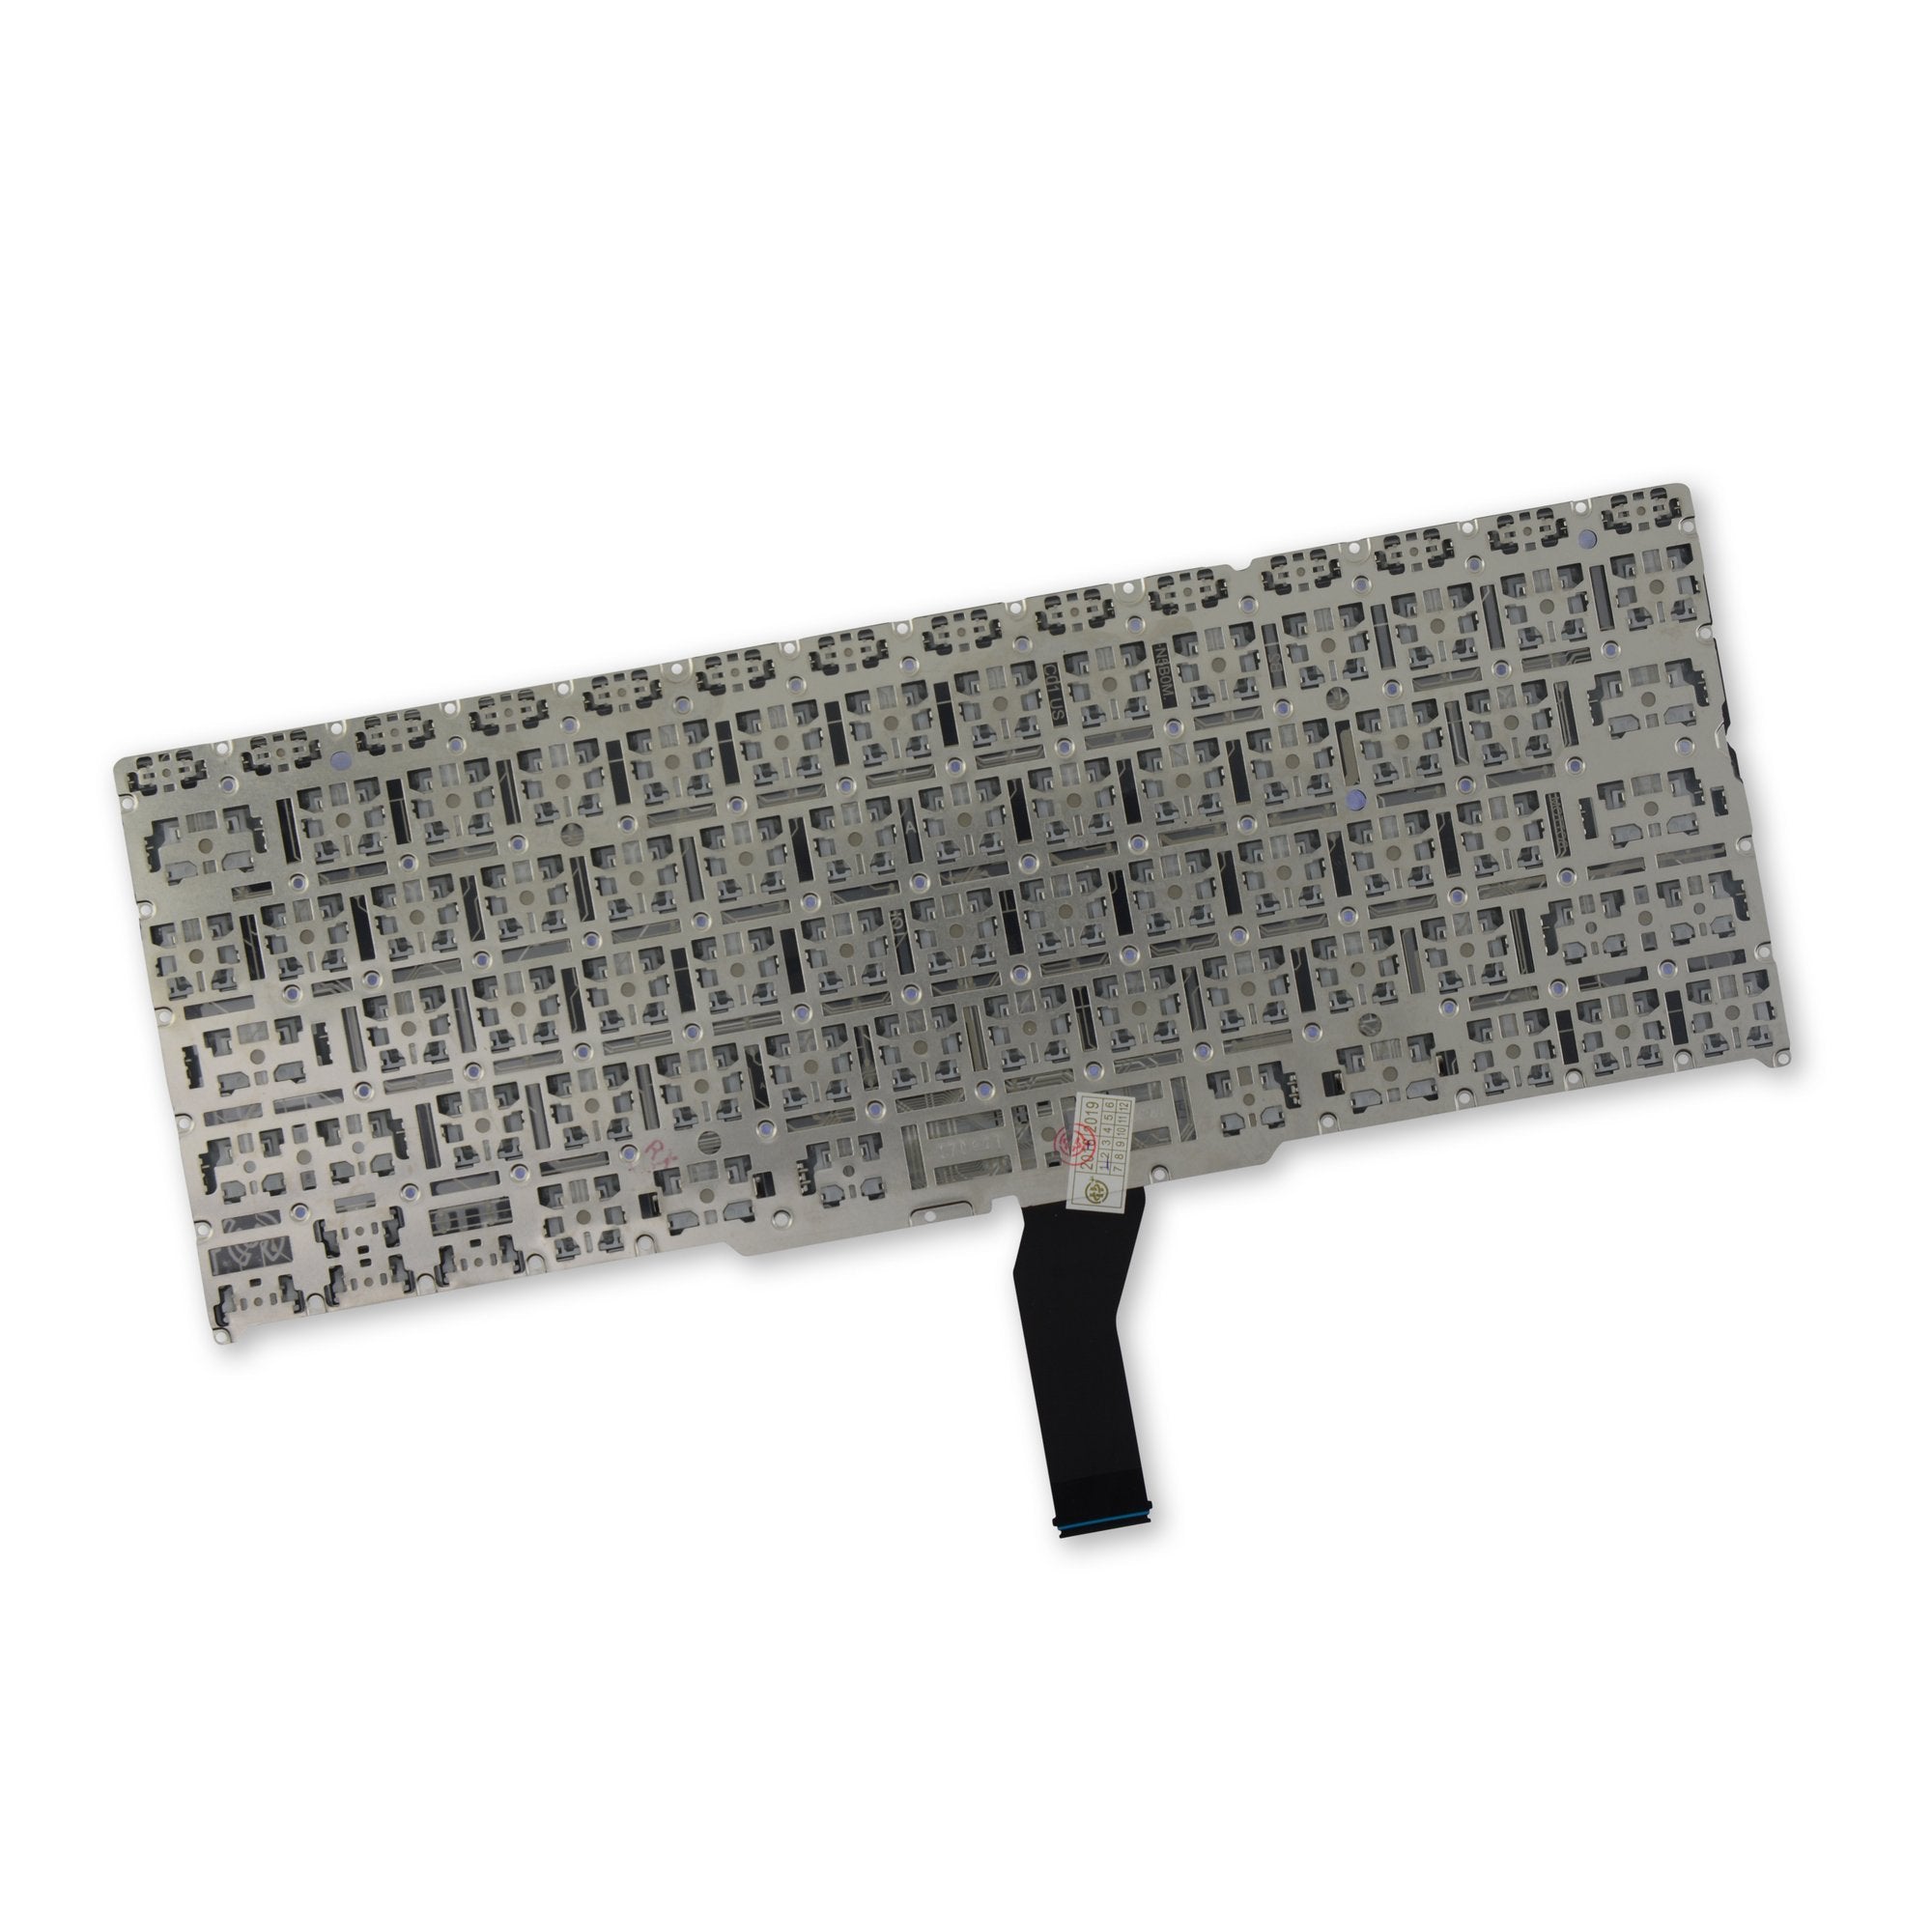 MacBook Air 11" (Mid 2011-Early 2015) Keyboard